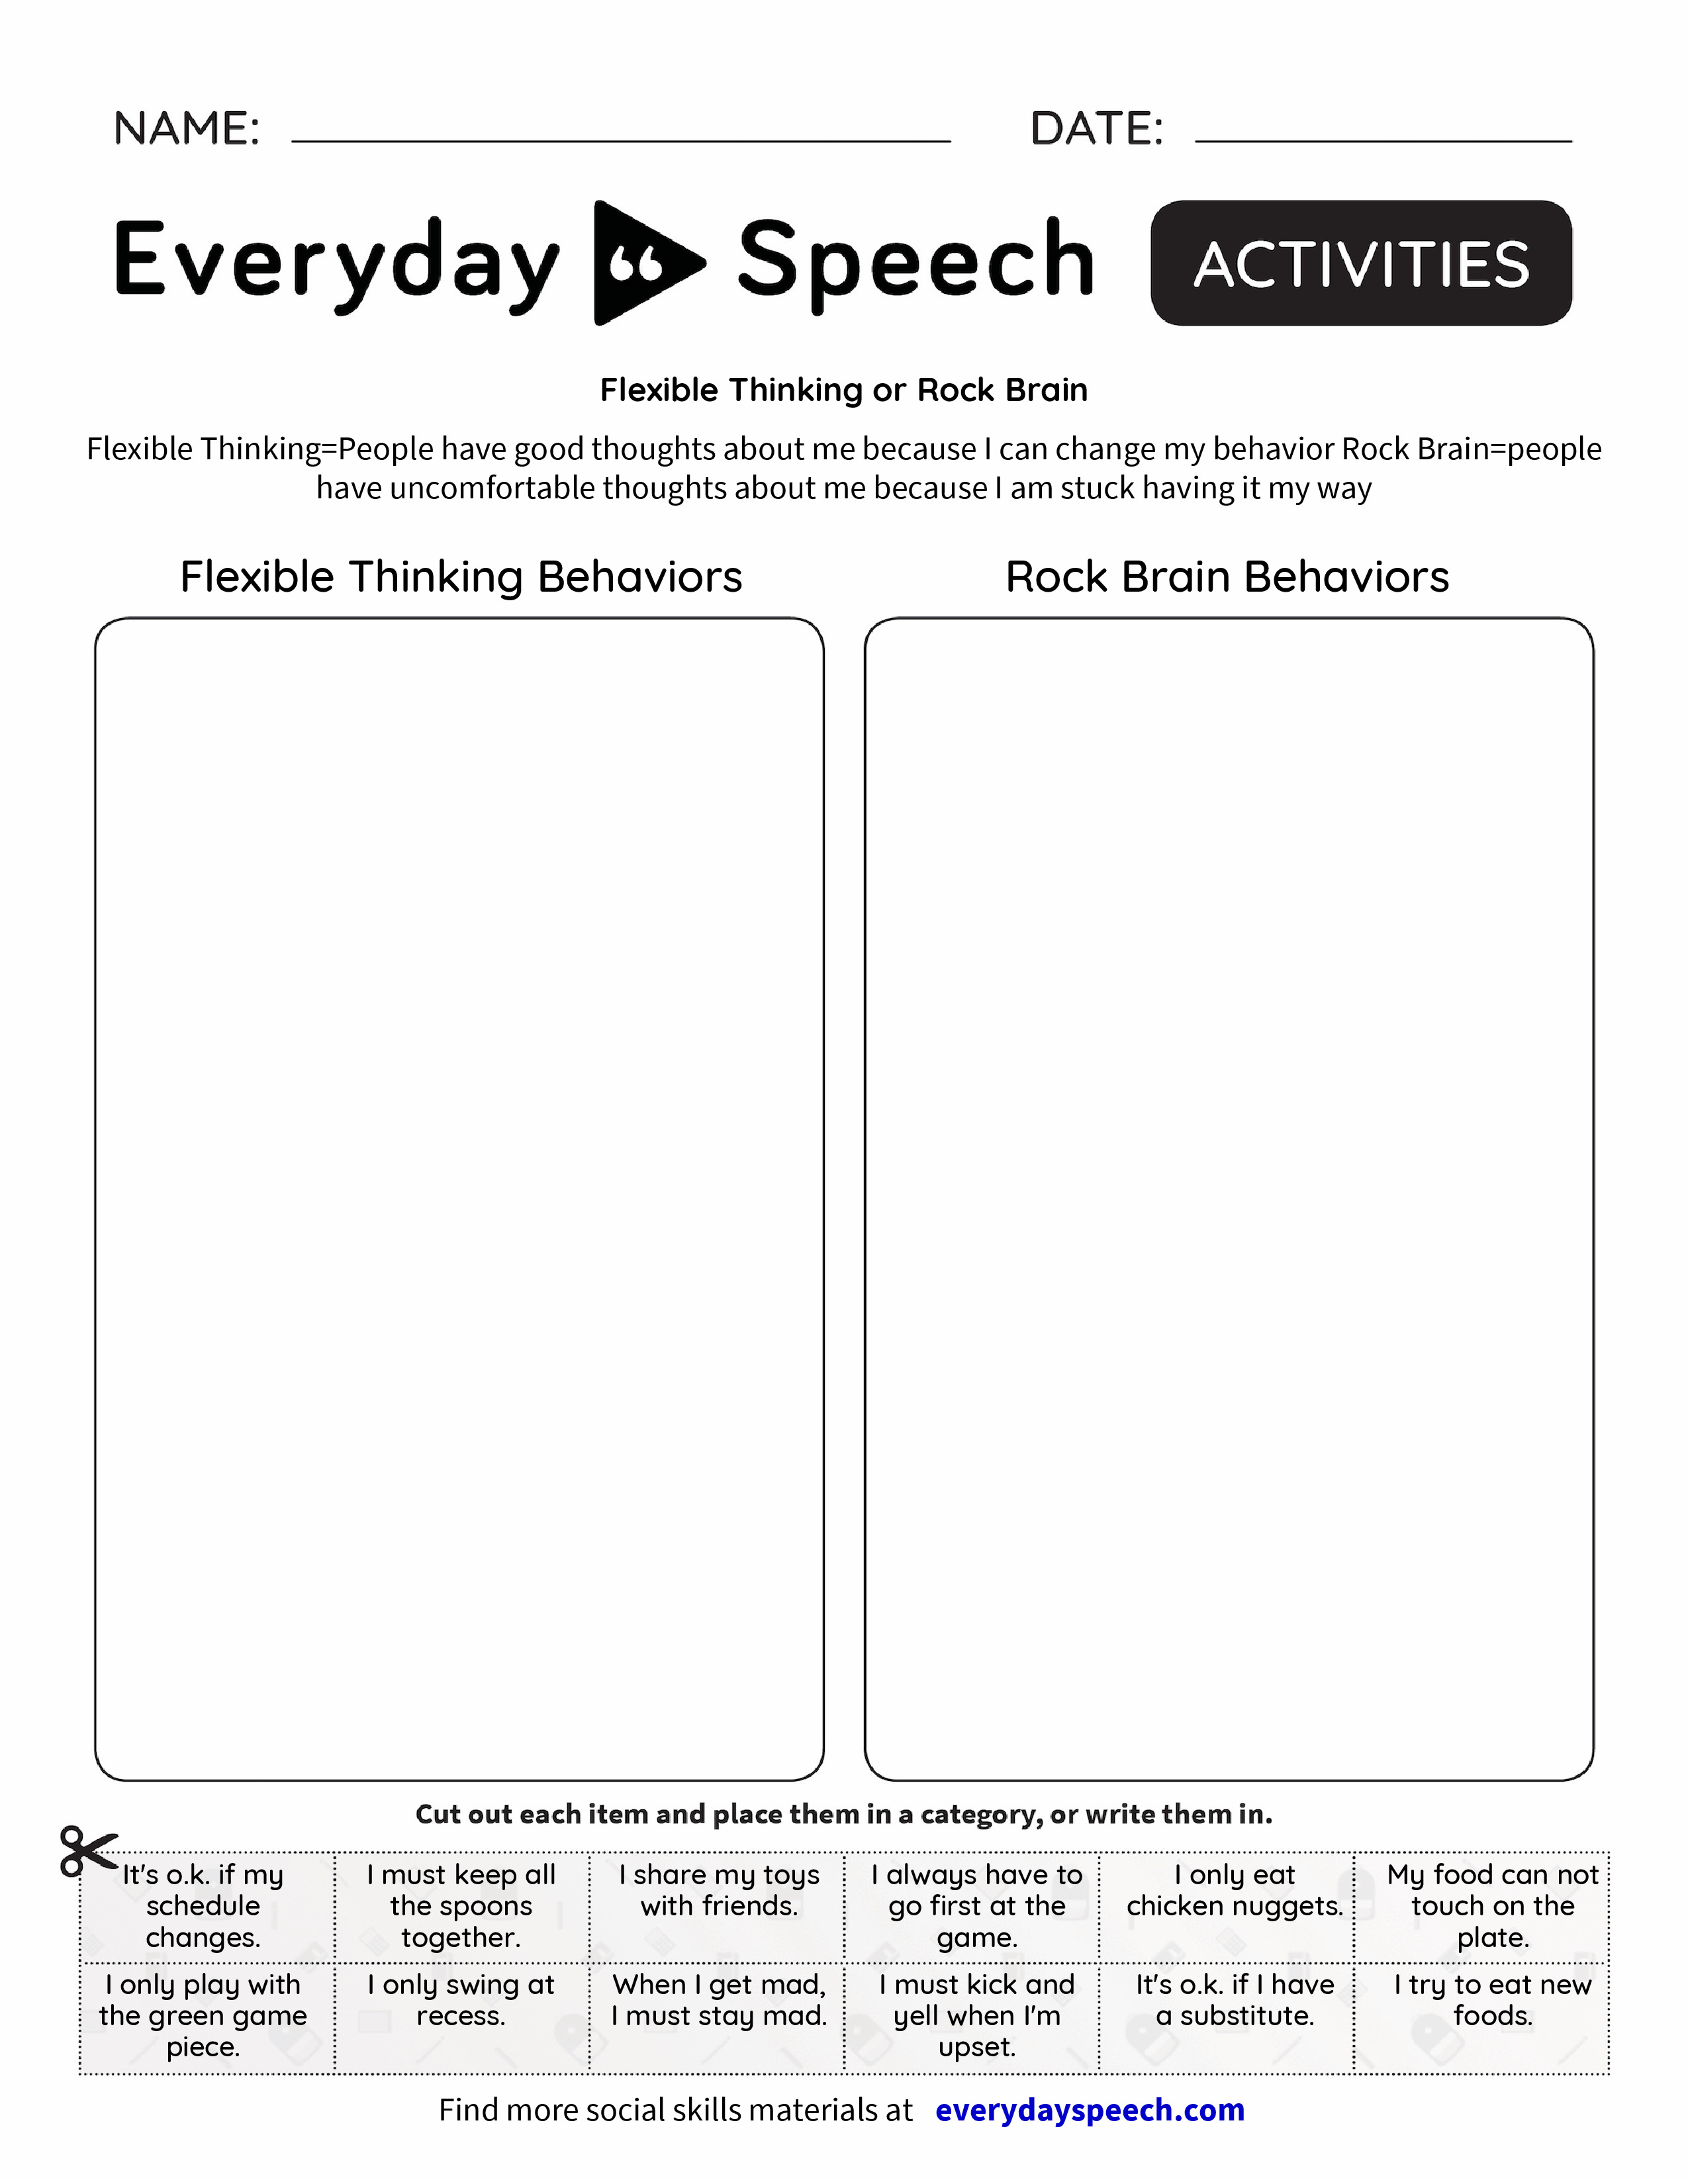 flexible-thinking-or-rock-brain-everyday-speech-everyday-speech